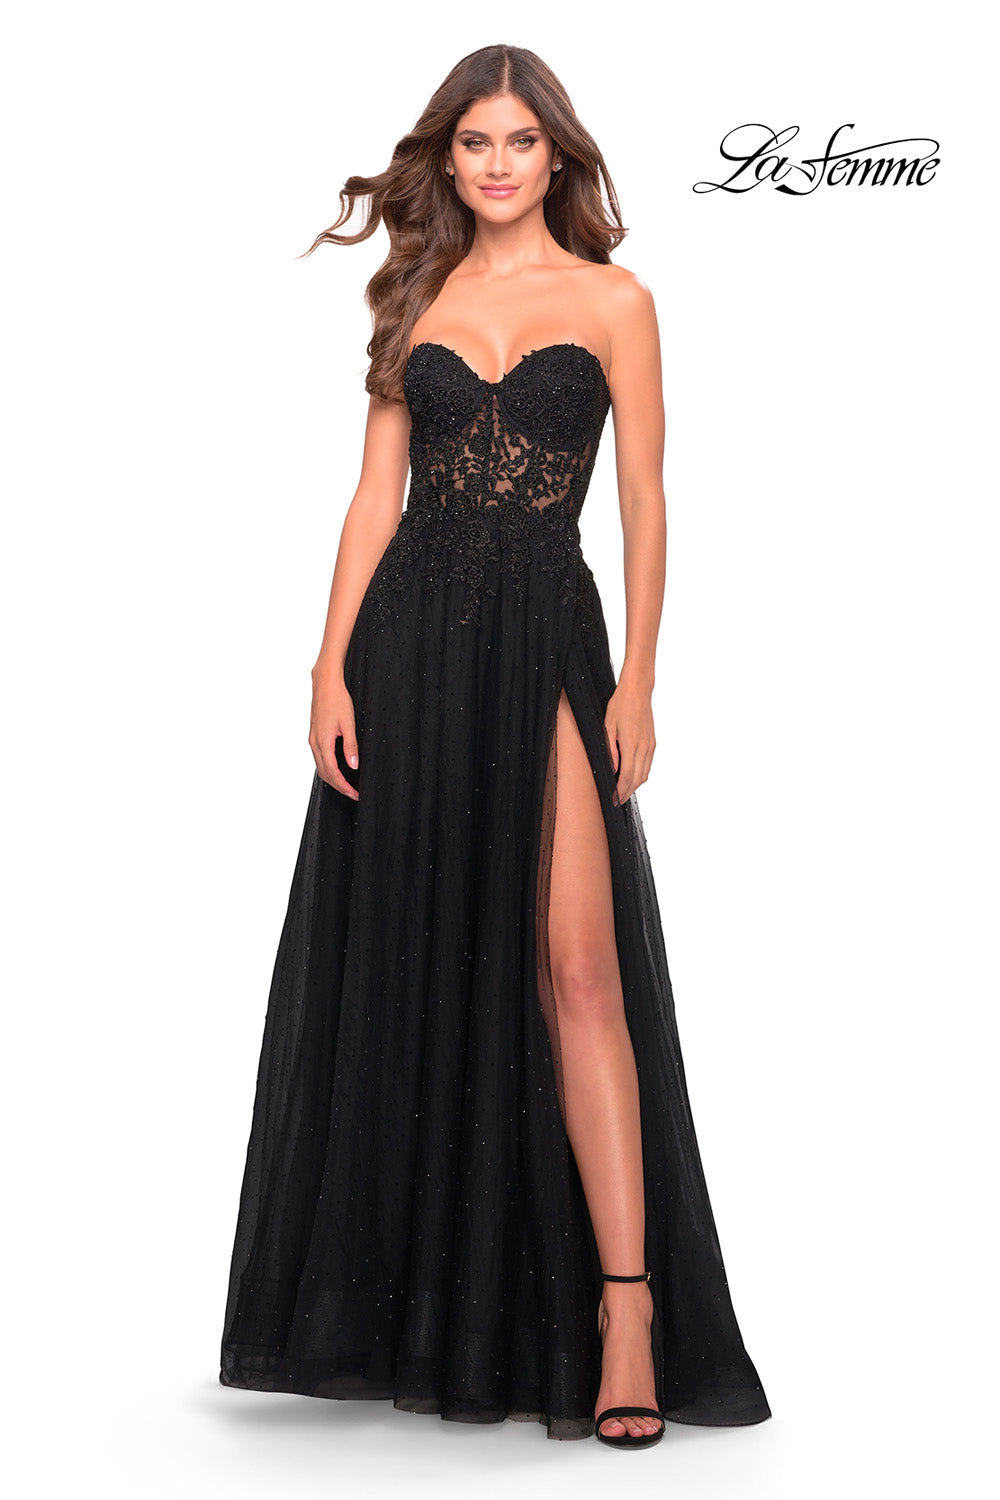 La Femme 31525 prom dress images.  La Femme 31525 is available in these colors: Black.